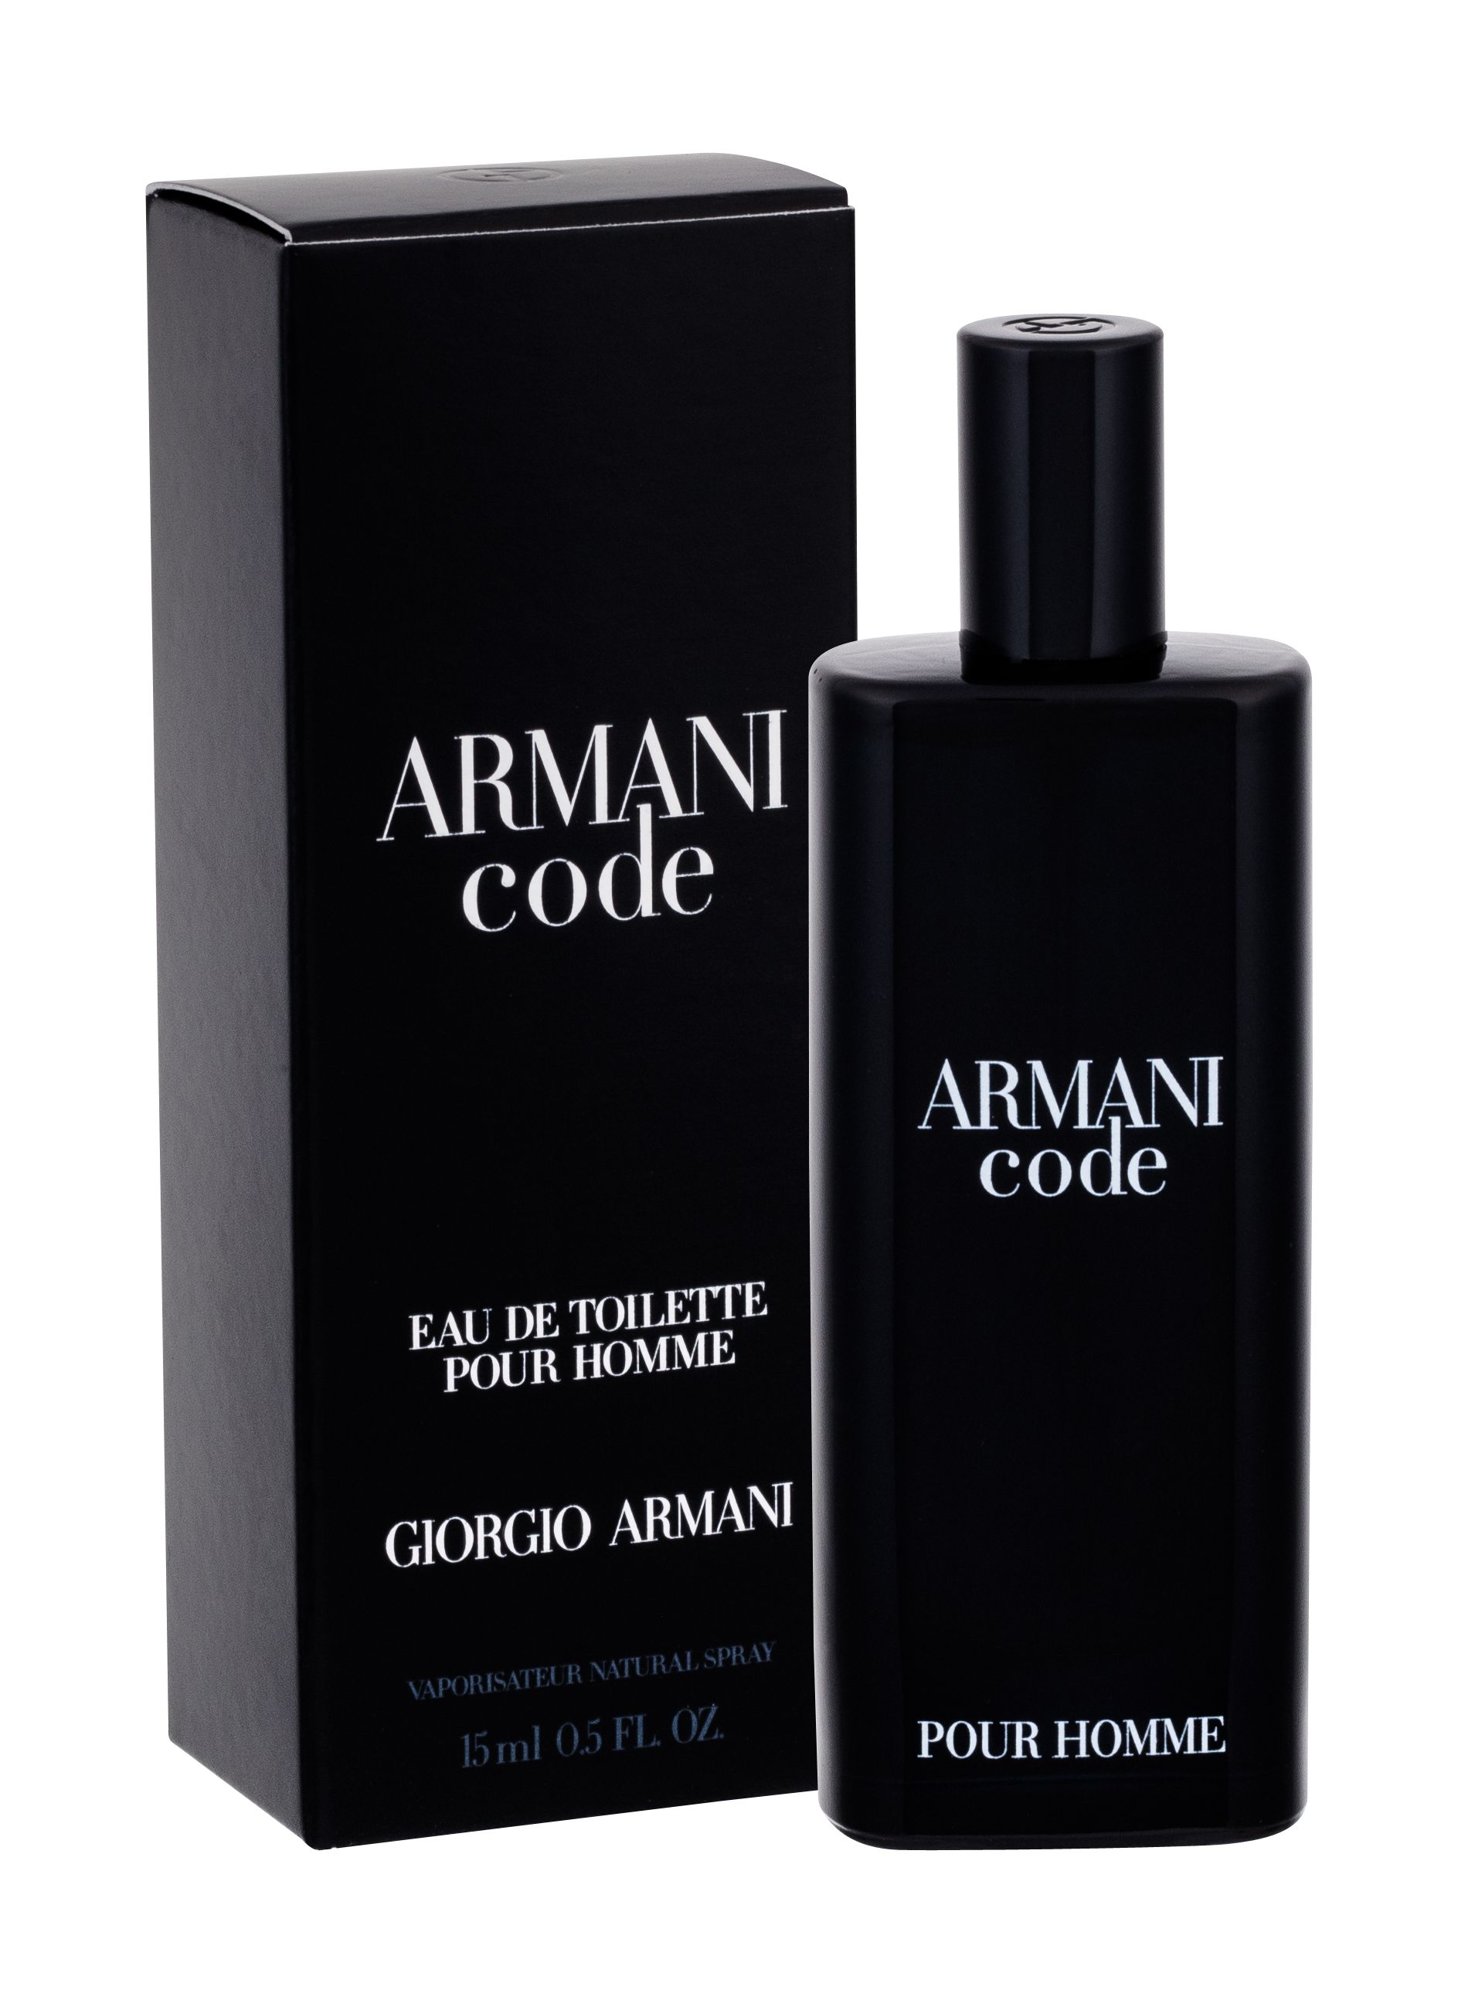 Armani code pour homme. Armani code EDT. Giorgio Armani туалетная вода Armani code homme. Giorgio Armani code Eau Toilette pour homme. Armani Armani code pour homme.